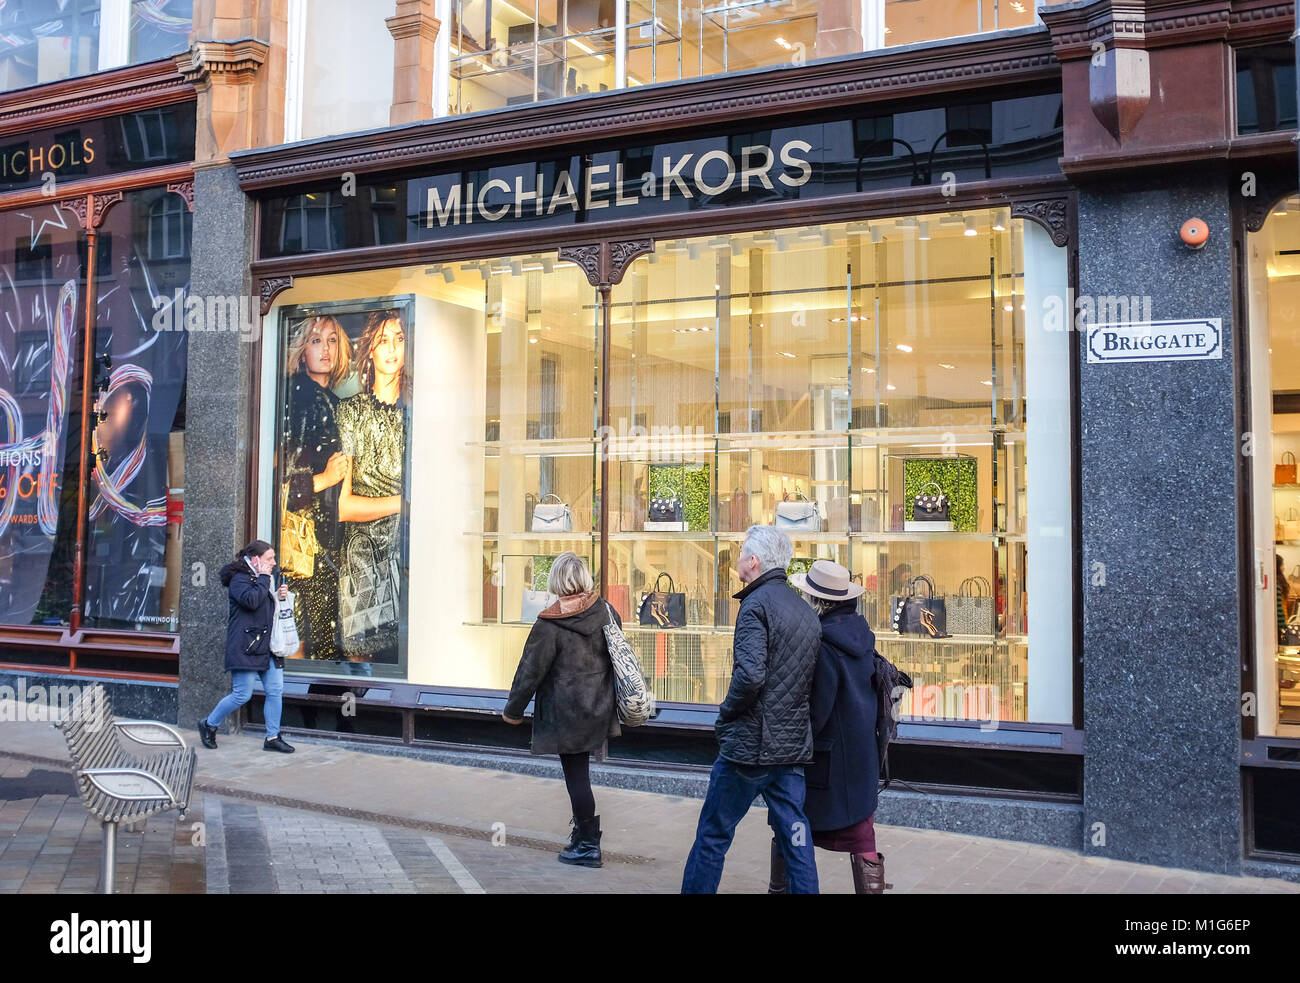 Michael Kors Uk Stores Online - karat.com 1684154782